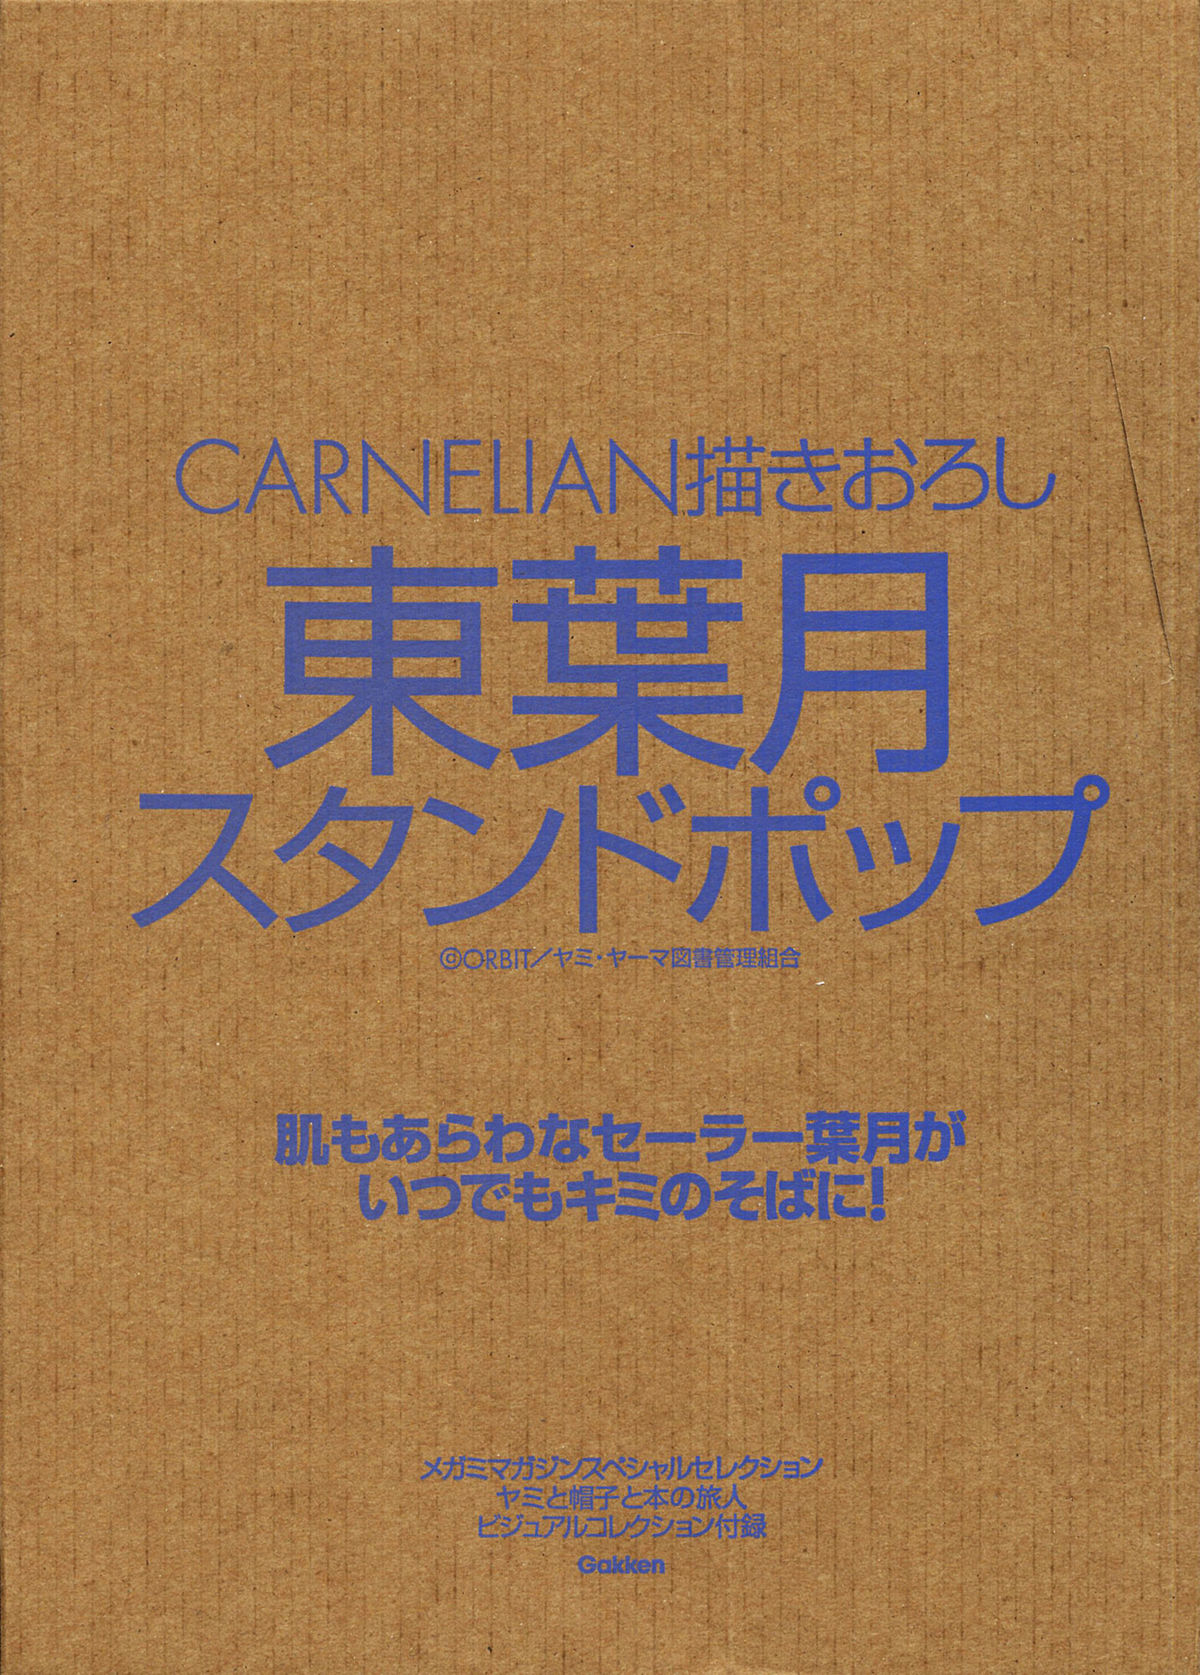 [Carnelian] ヤミと帽子と本の旅人VISUAL COLLECTION